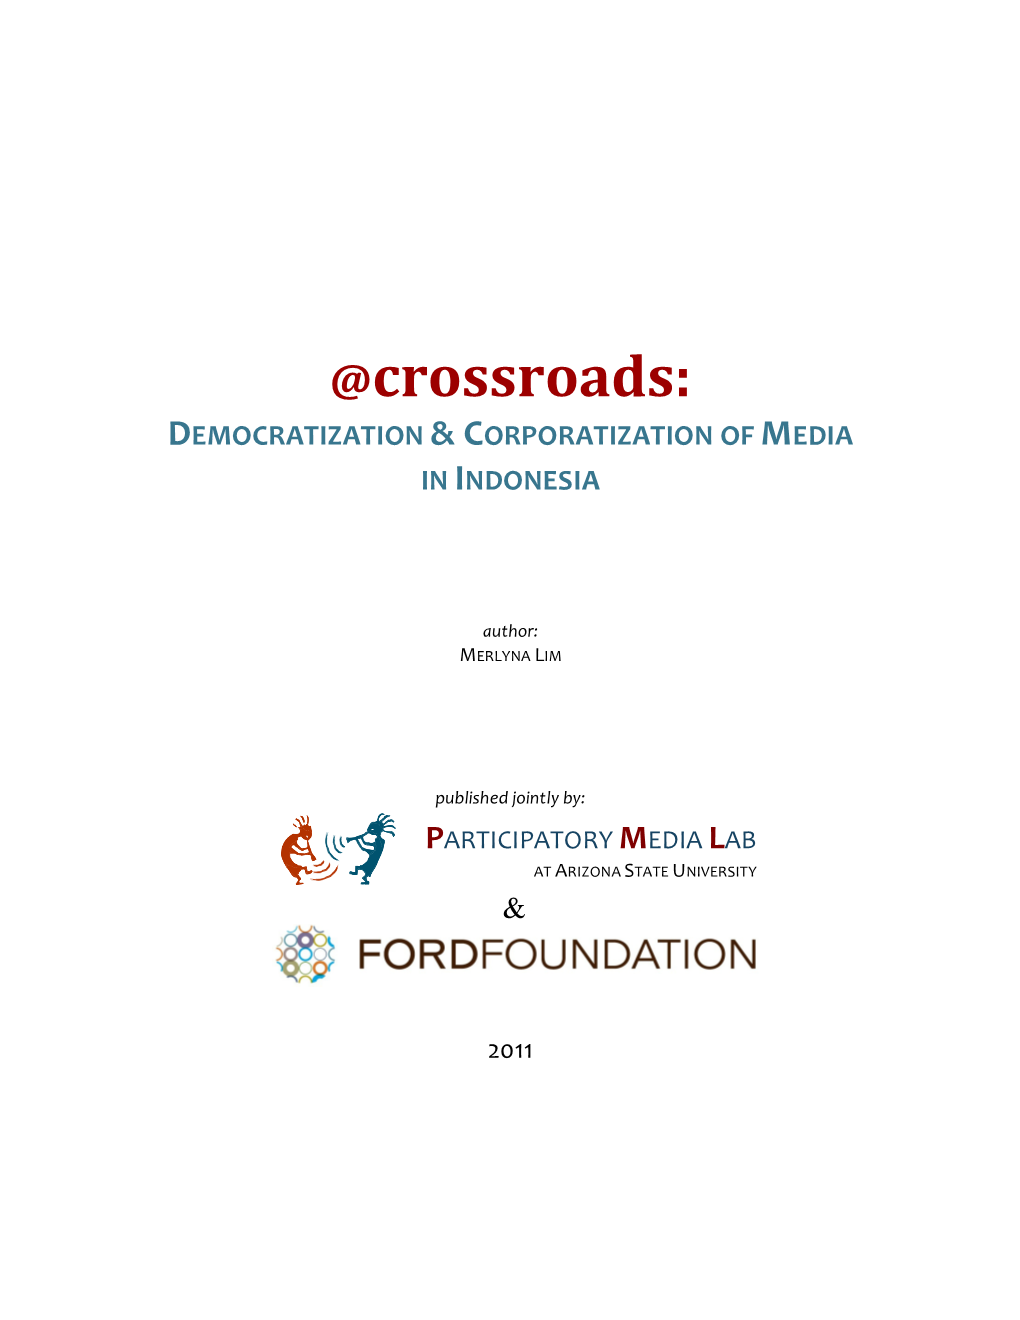 Crossroads: Democratization and Corporatization of Media in Indonesia Merlyna Lim